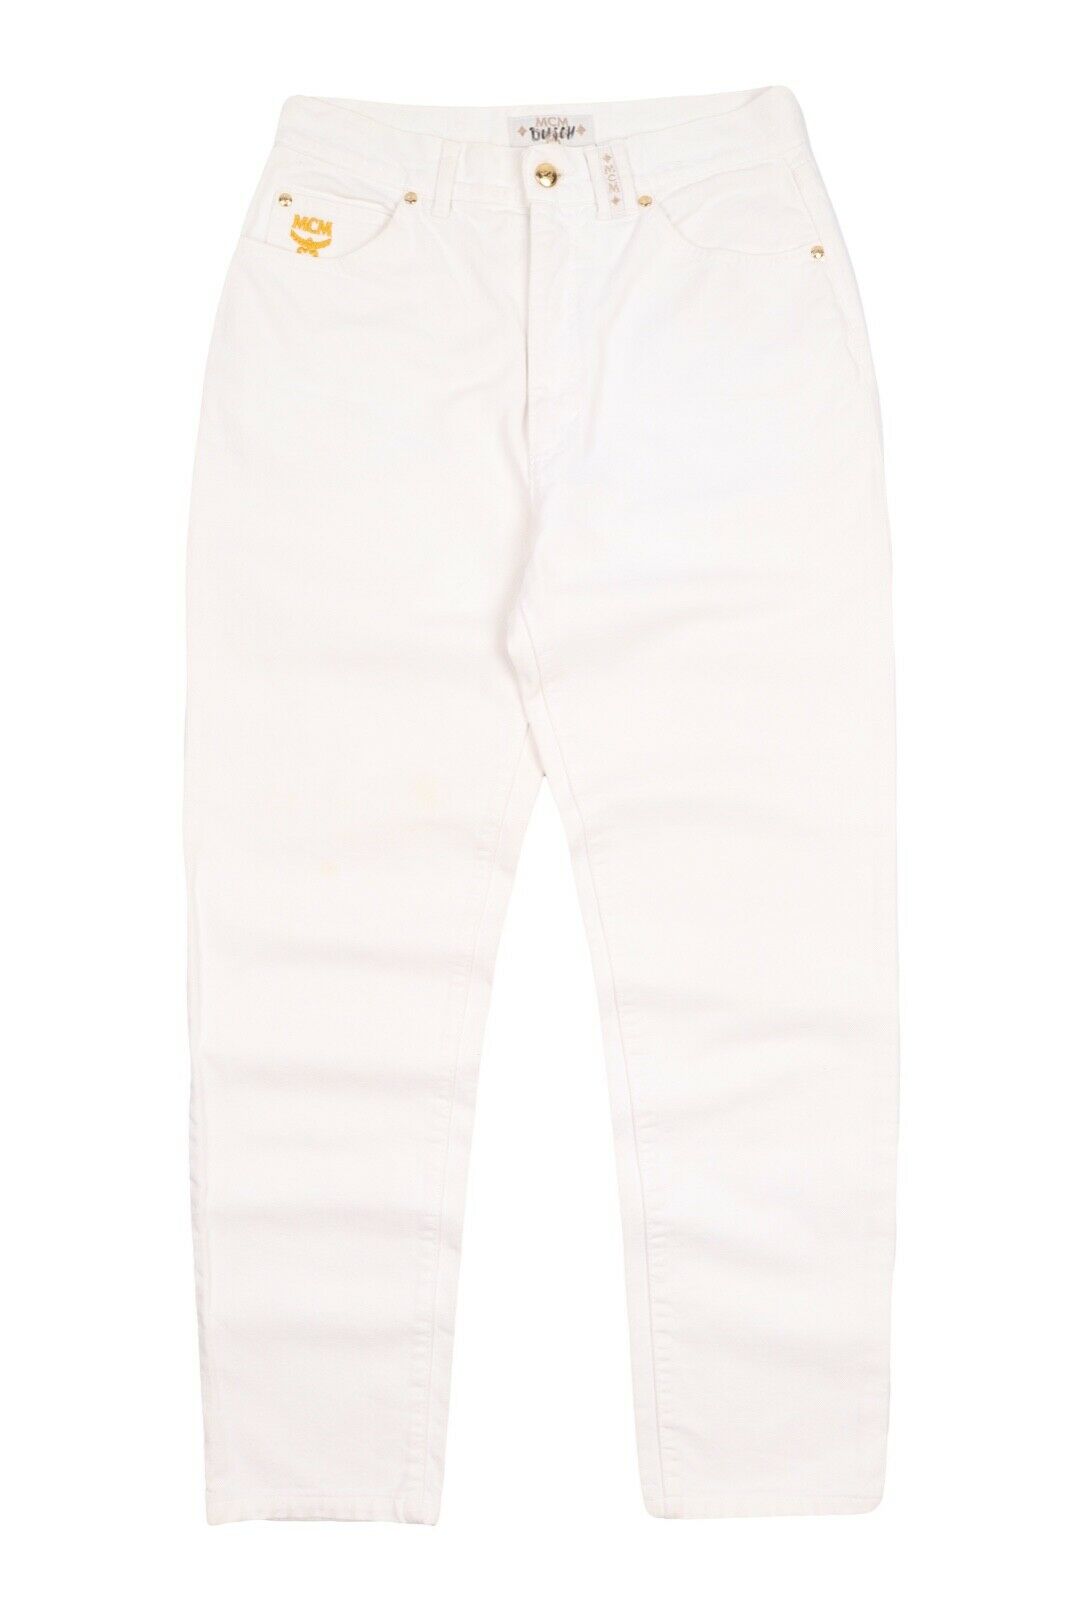 Women's Vintage MCM White Cotton Stretch Denim Breeches Capri